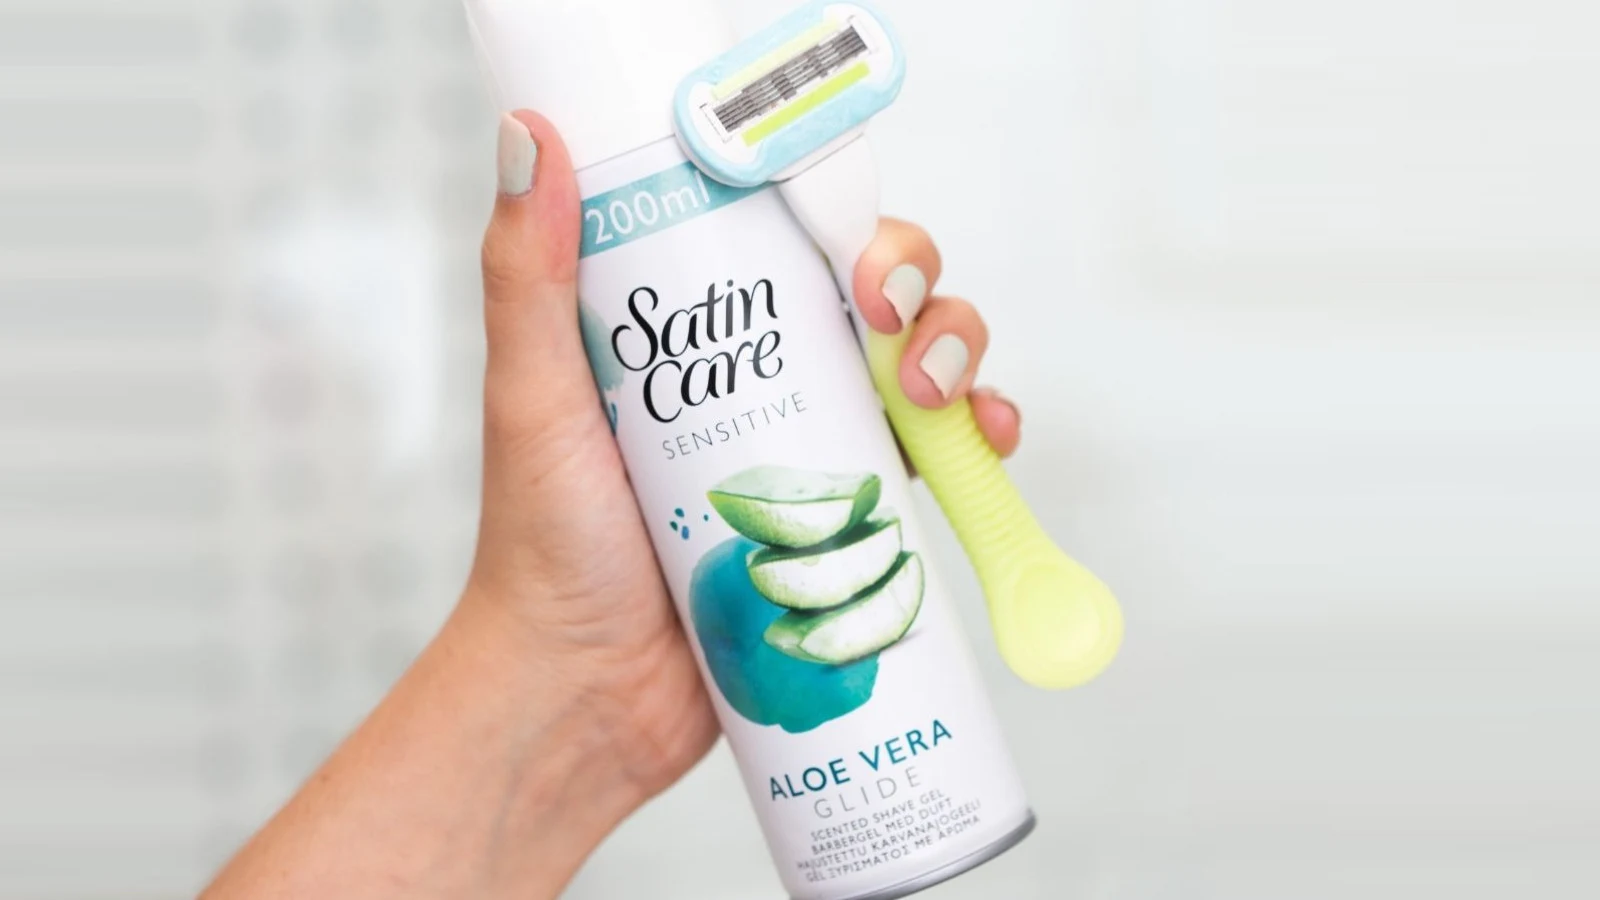 Venus Satin Care shaving gel and razor